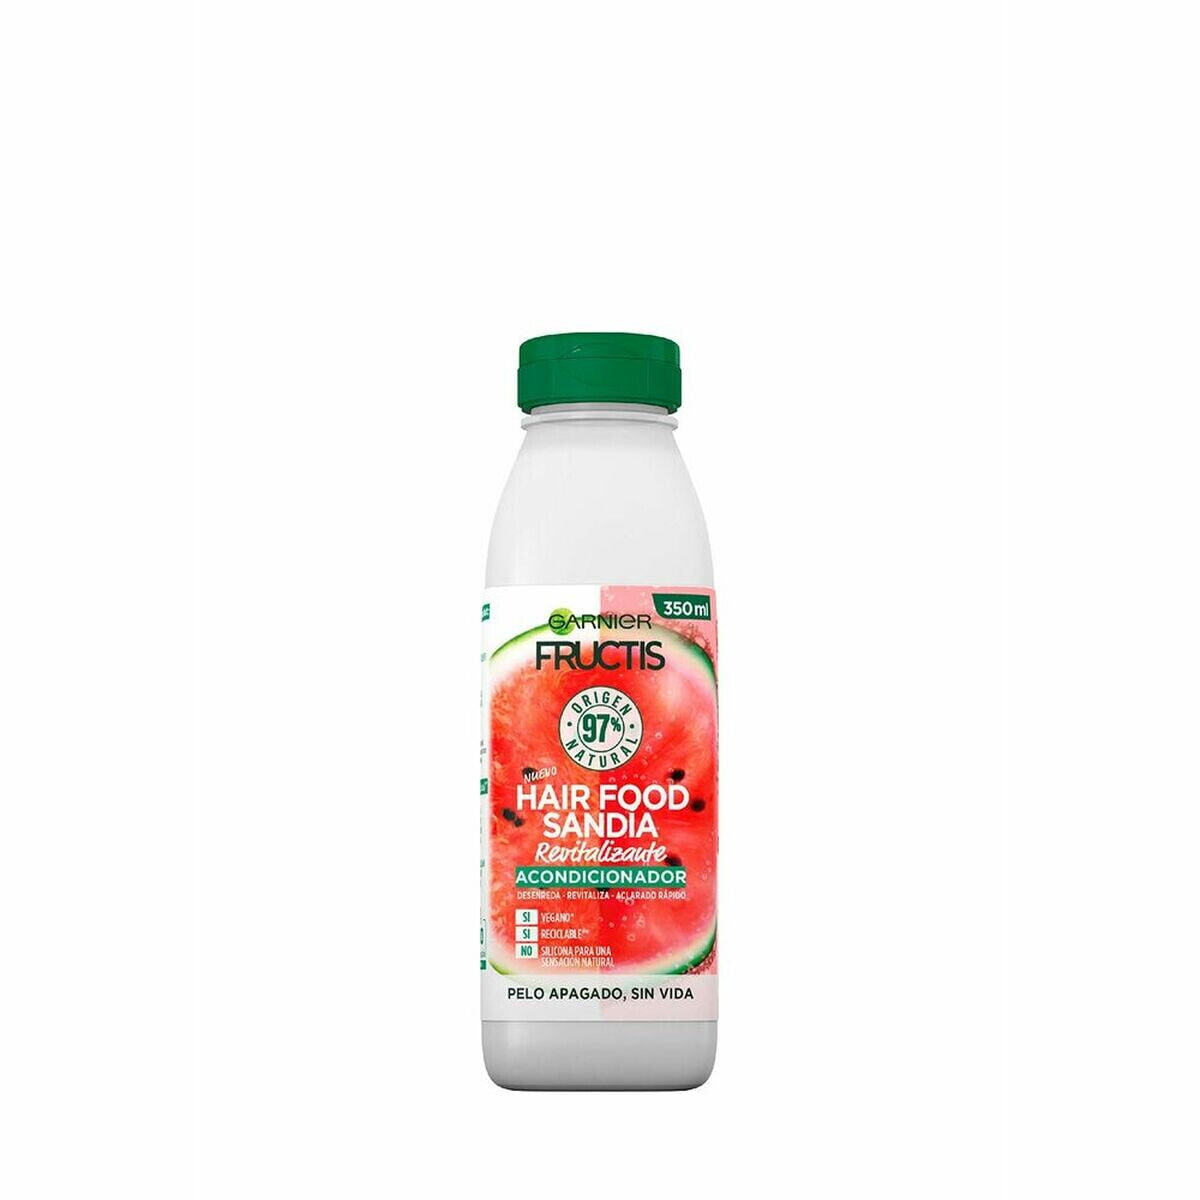 Revitalising Conditioner Garnier Fructis Hair Food Watermelon 350 ml